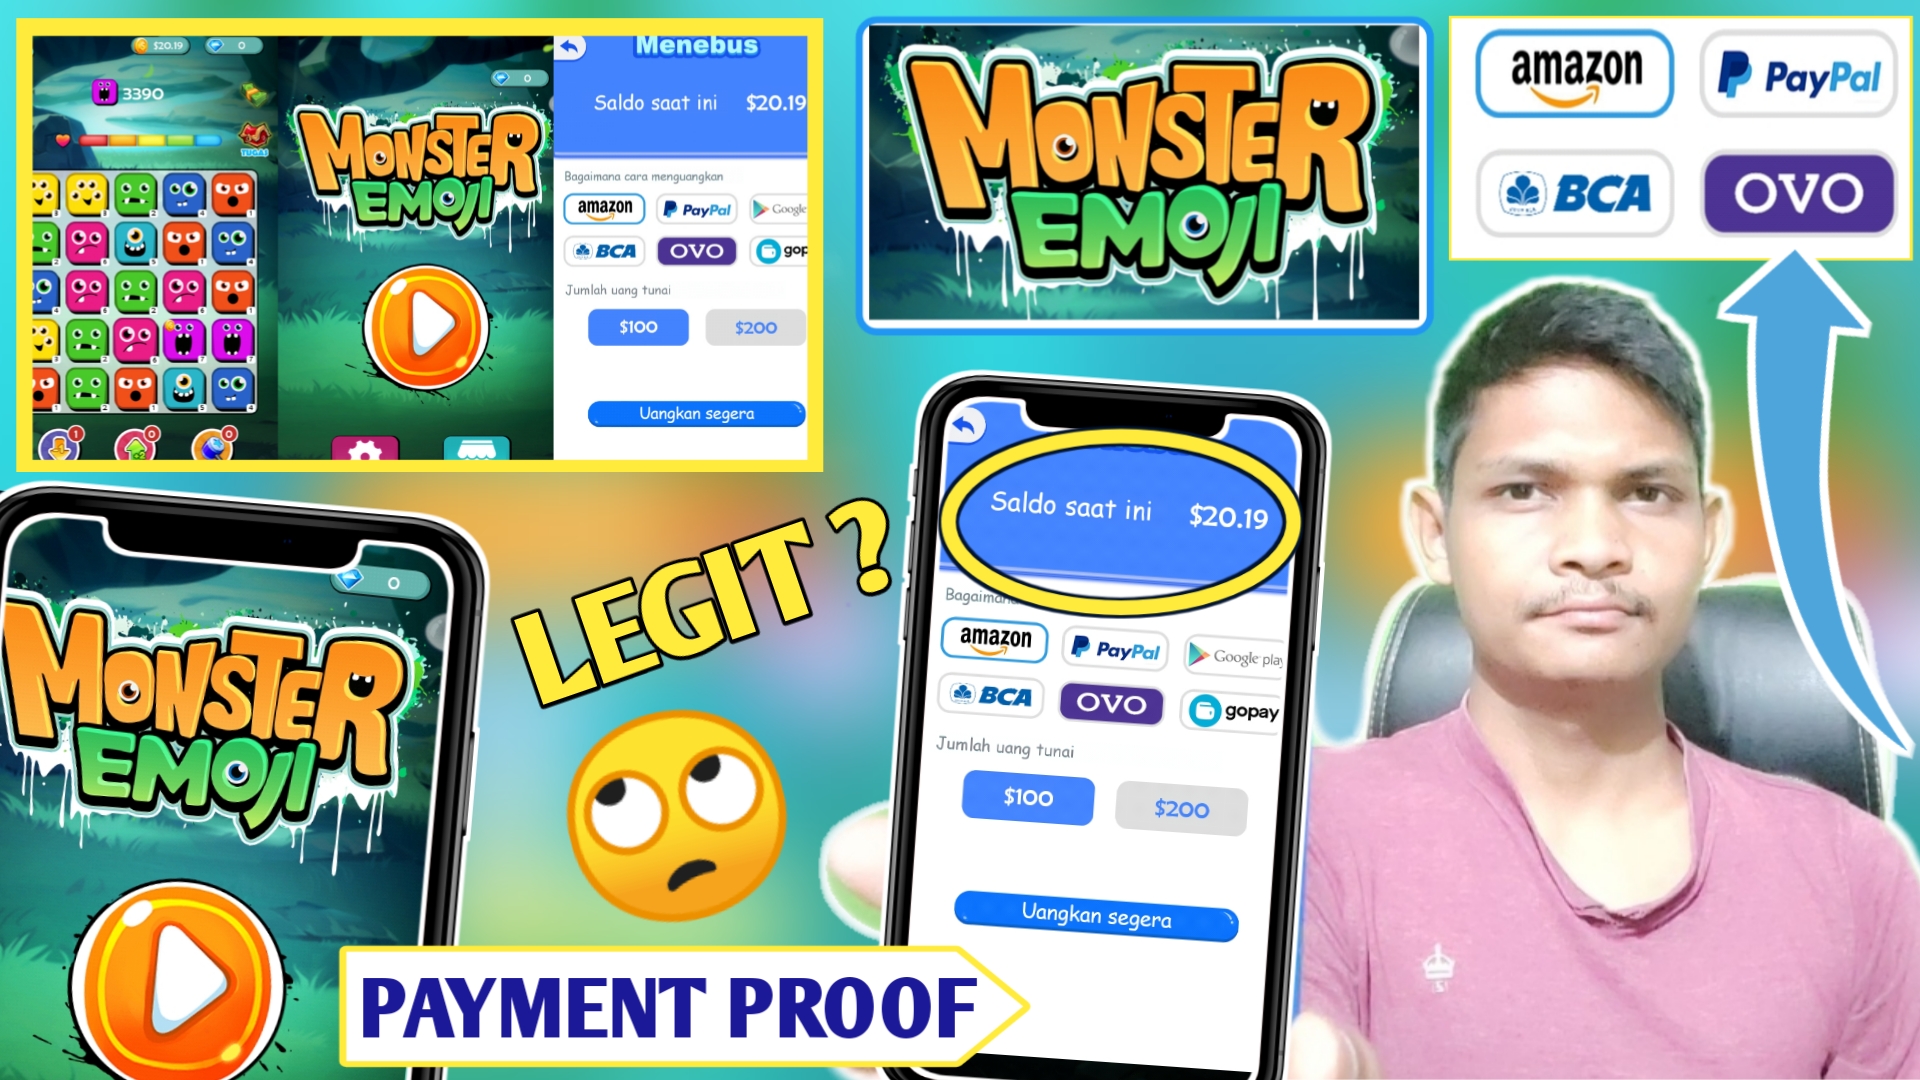 Monster Emoji Payment Proof